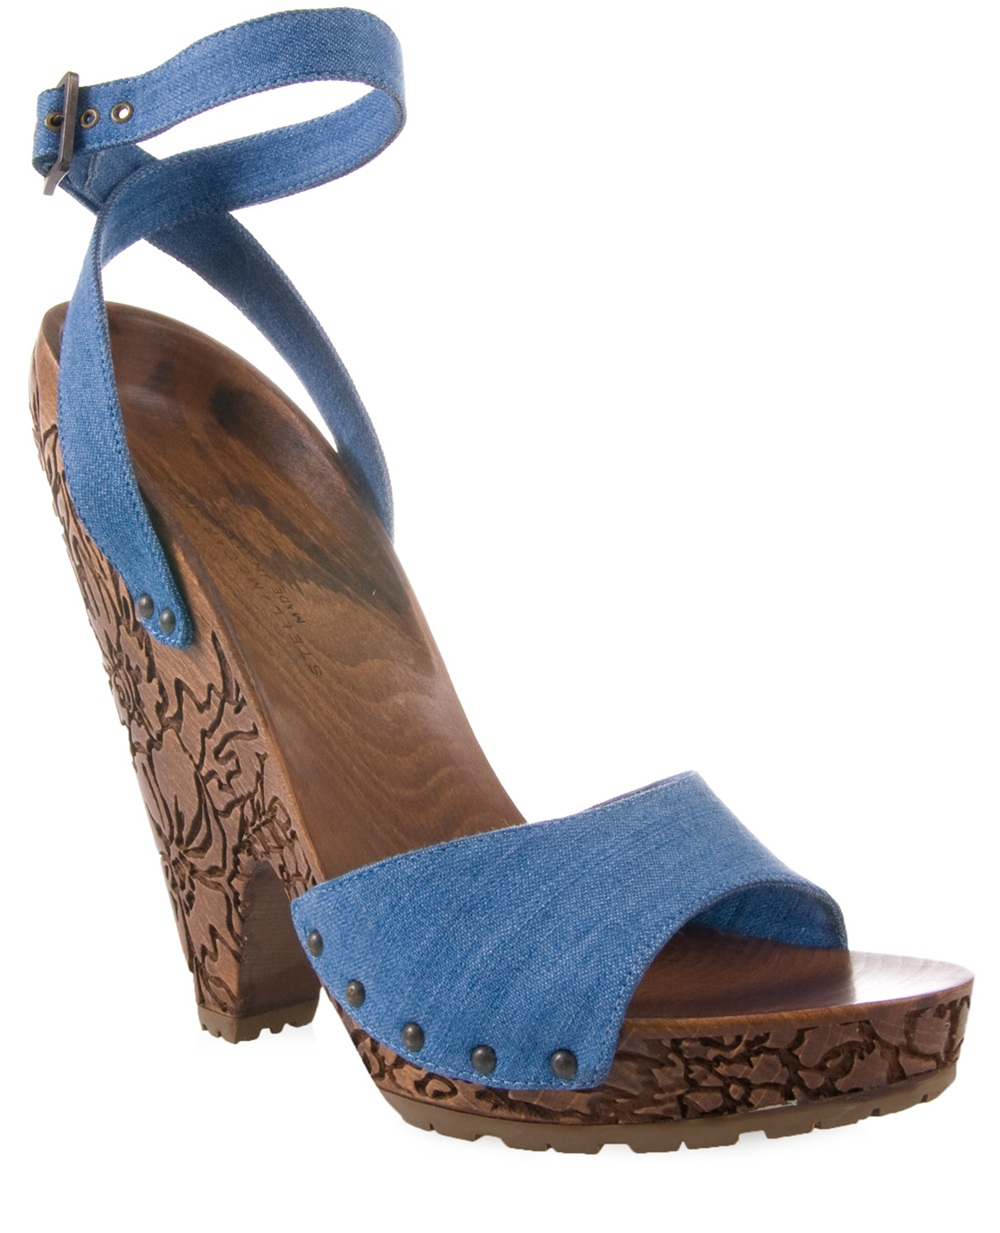 Stella mccartney Denim Sandal with Carved Wooden Heel in Blue | Lyst